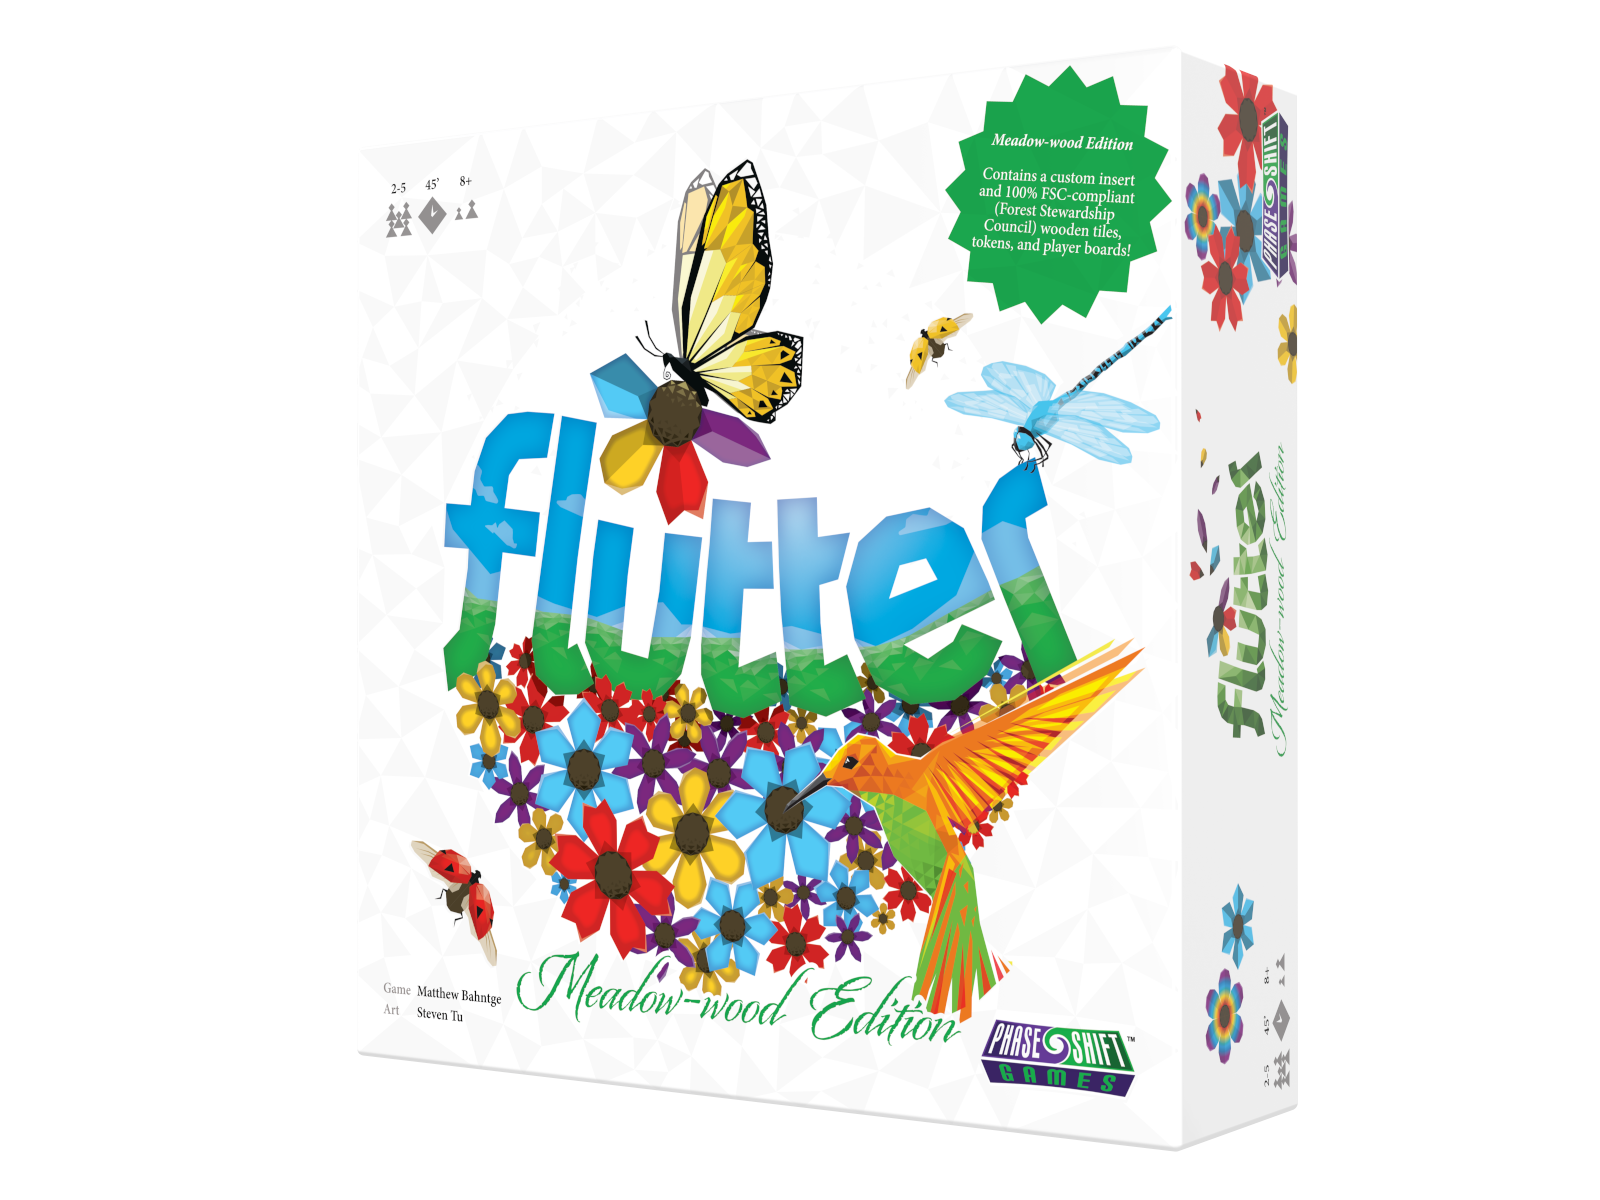 Flutter Meadow-wood Edition